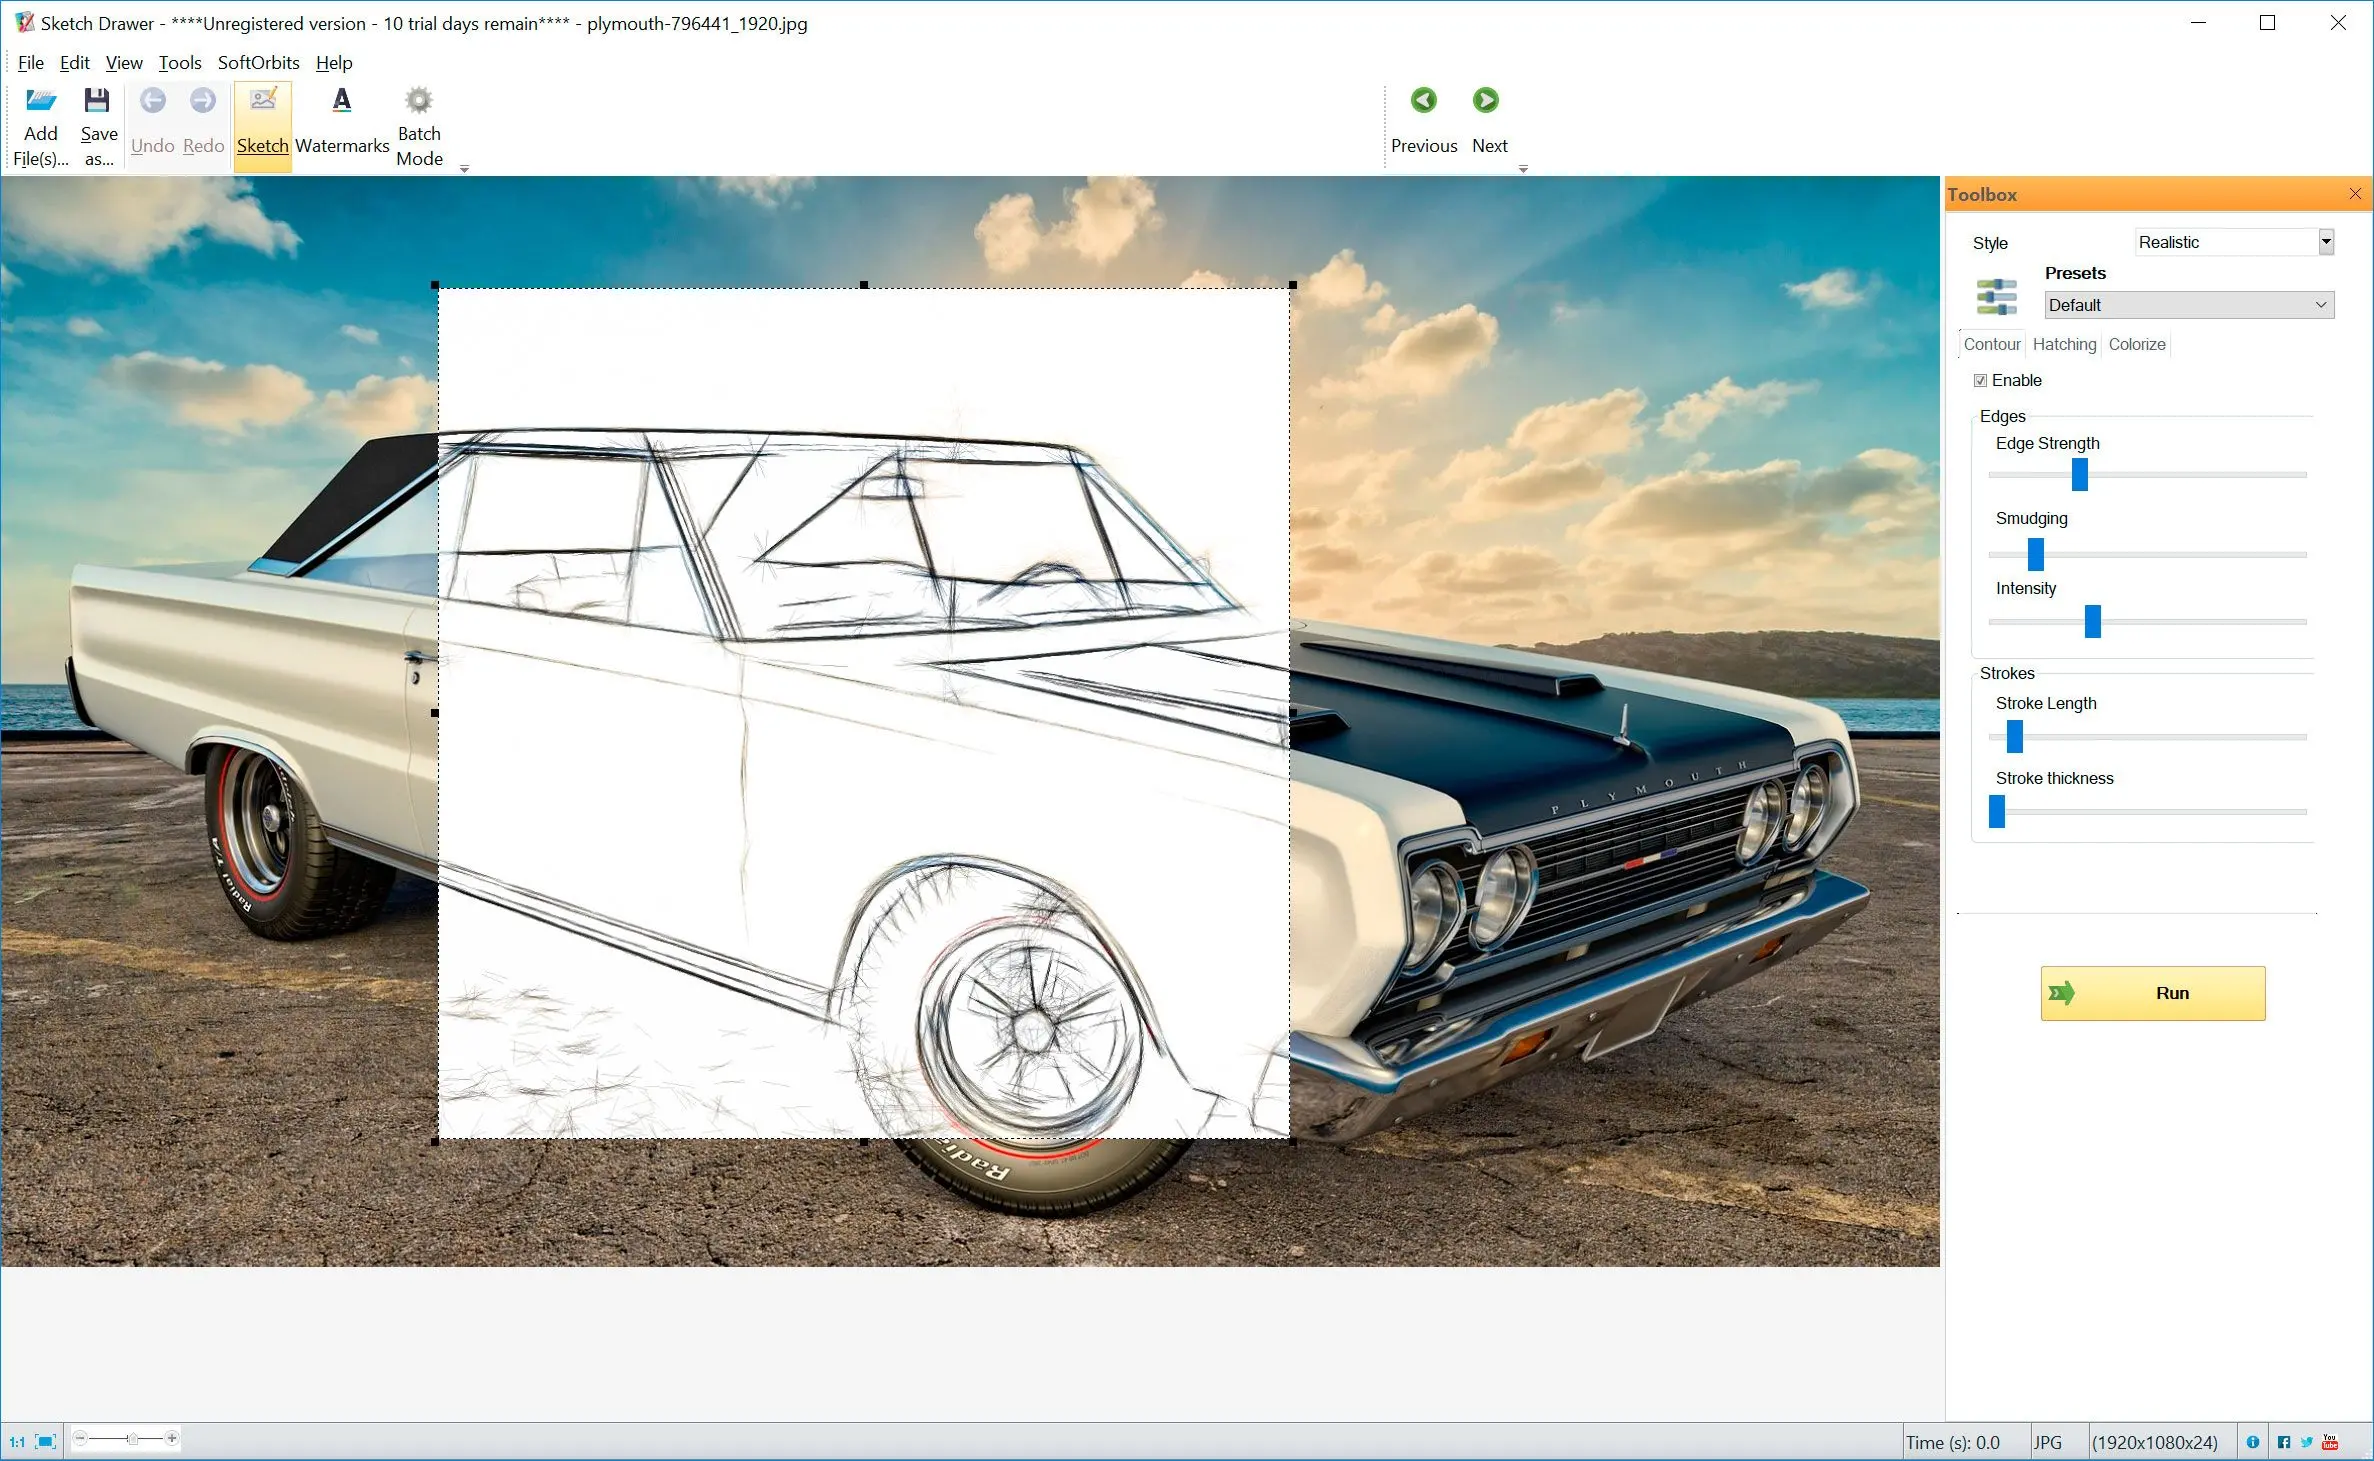 Aplicación de conversión de fotos a dibujos de líneas software gratuito..